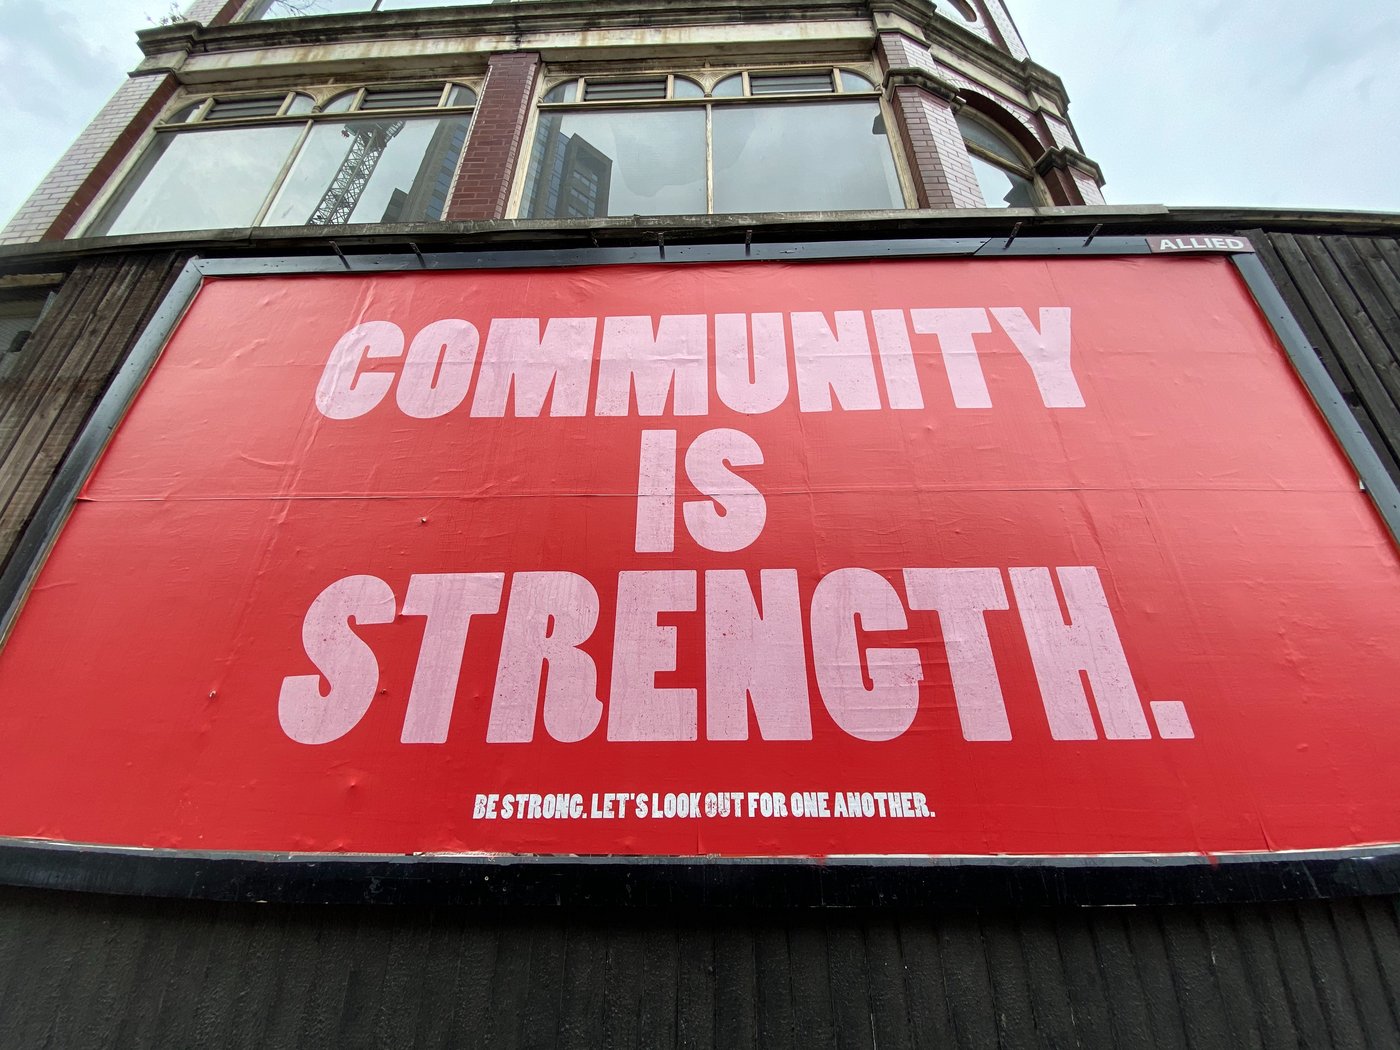 Werbeplakat "Community is Strength"